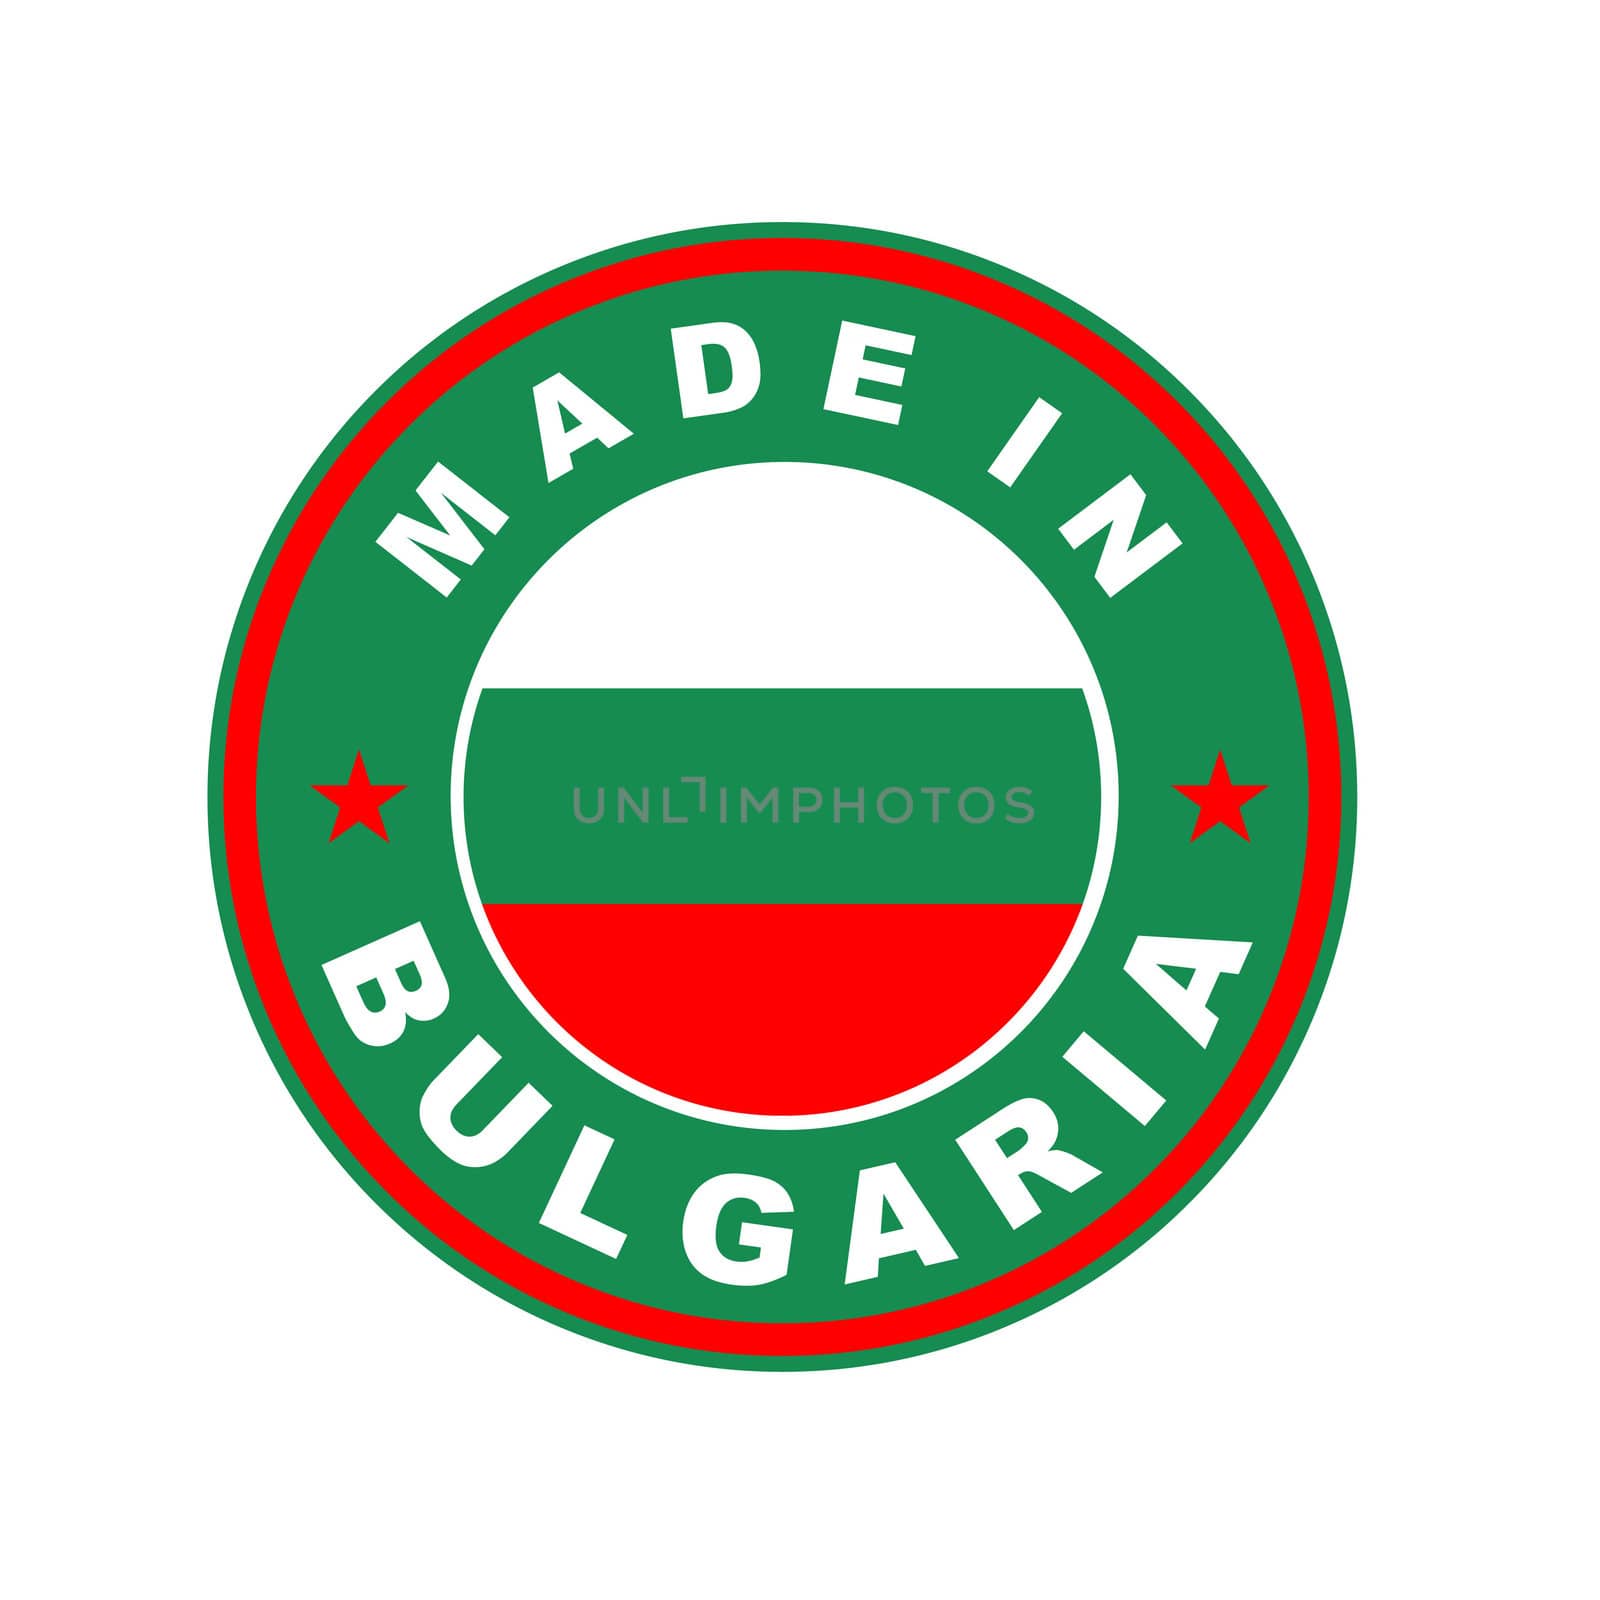 made in bulgaria by tony4urban